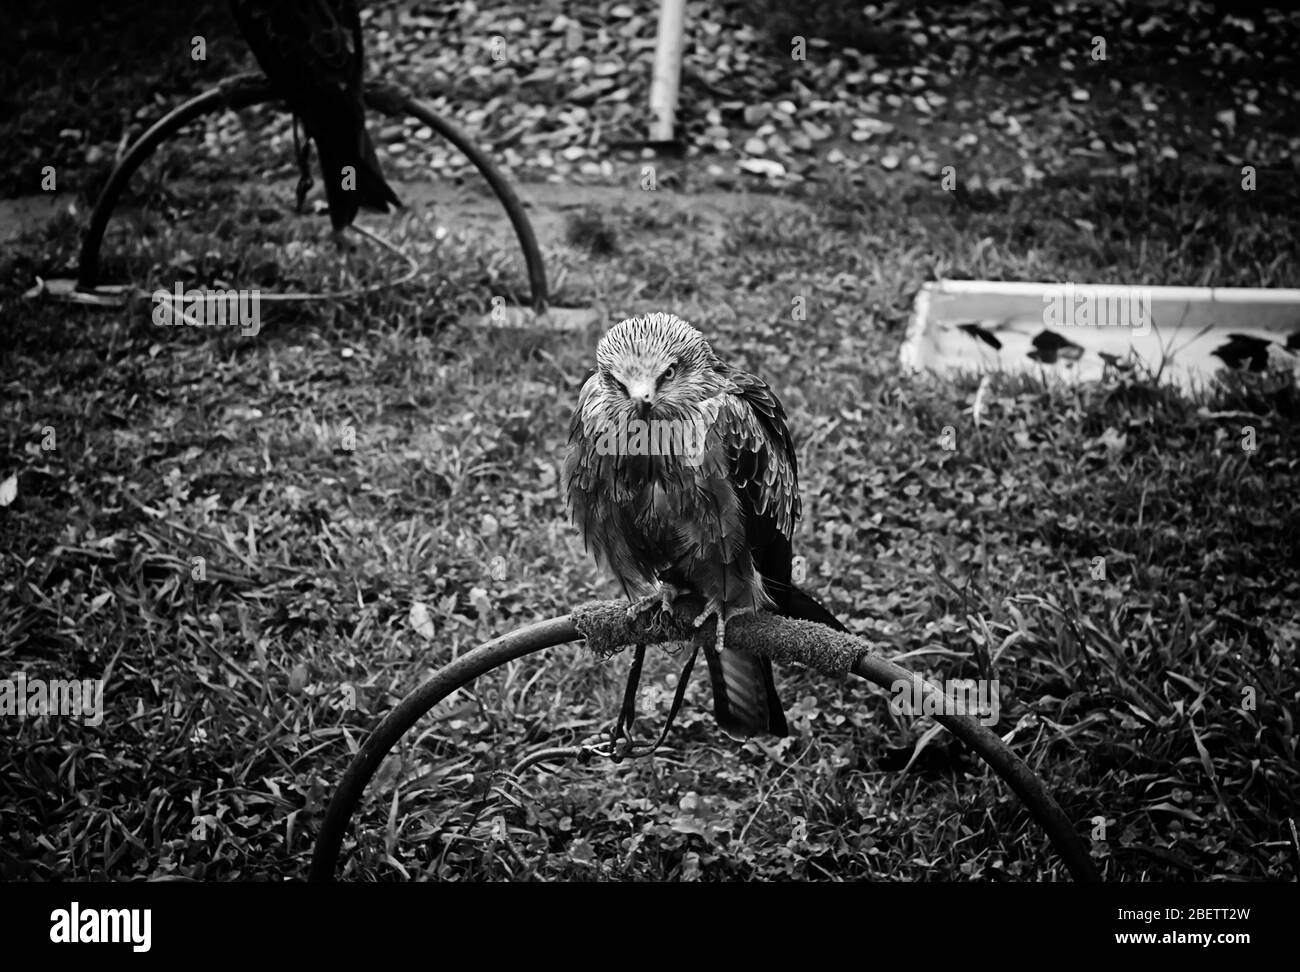 Eagle small park, exhibition of falconry, wild animals Stock Photo